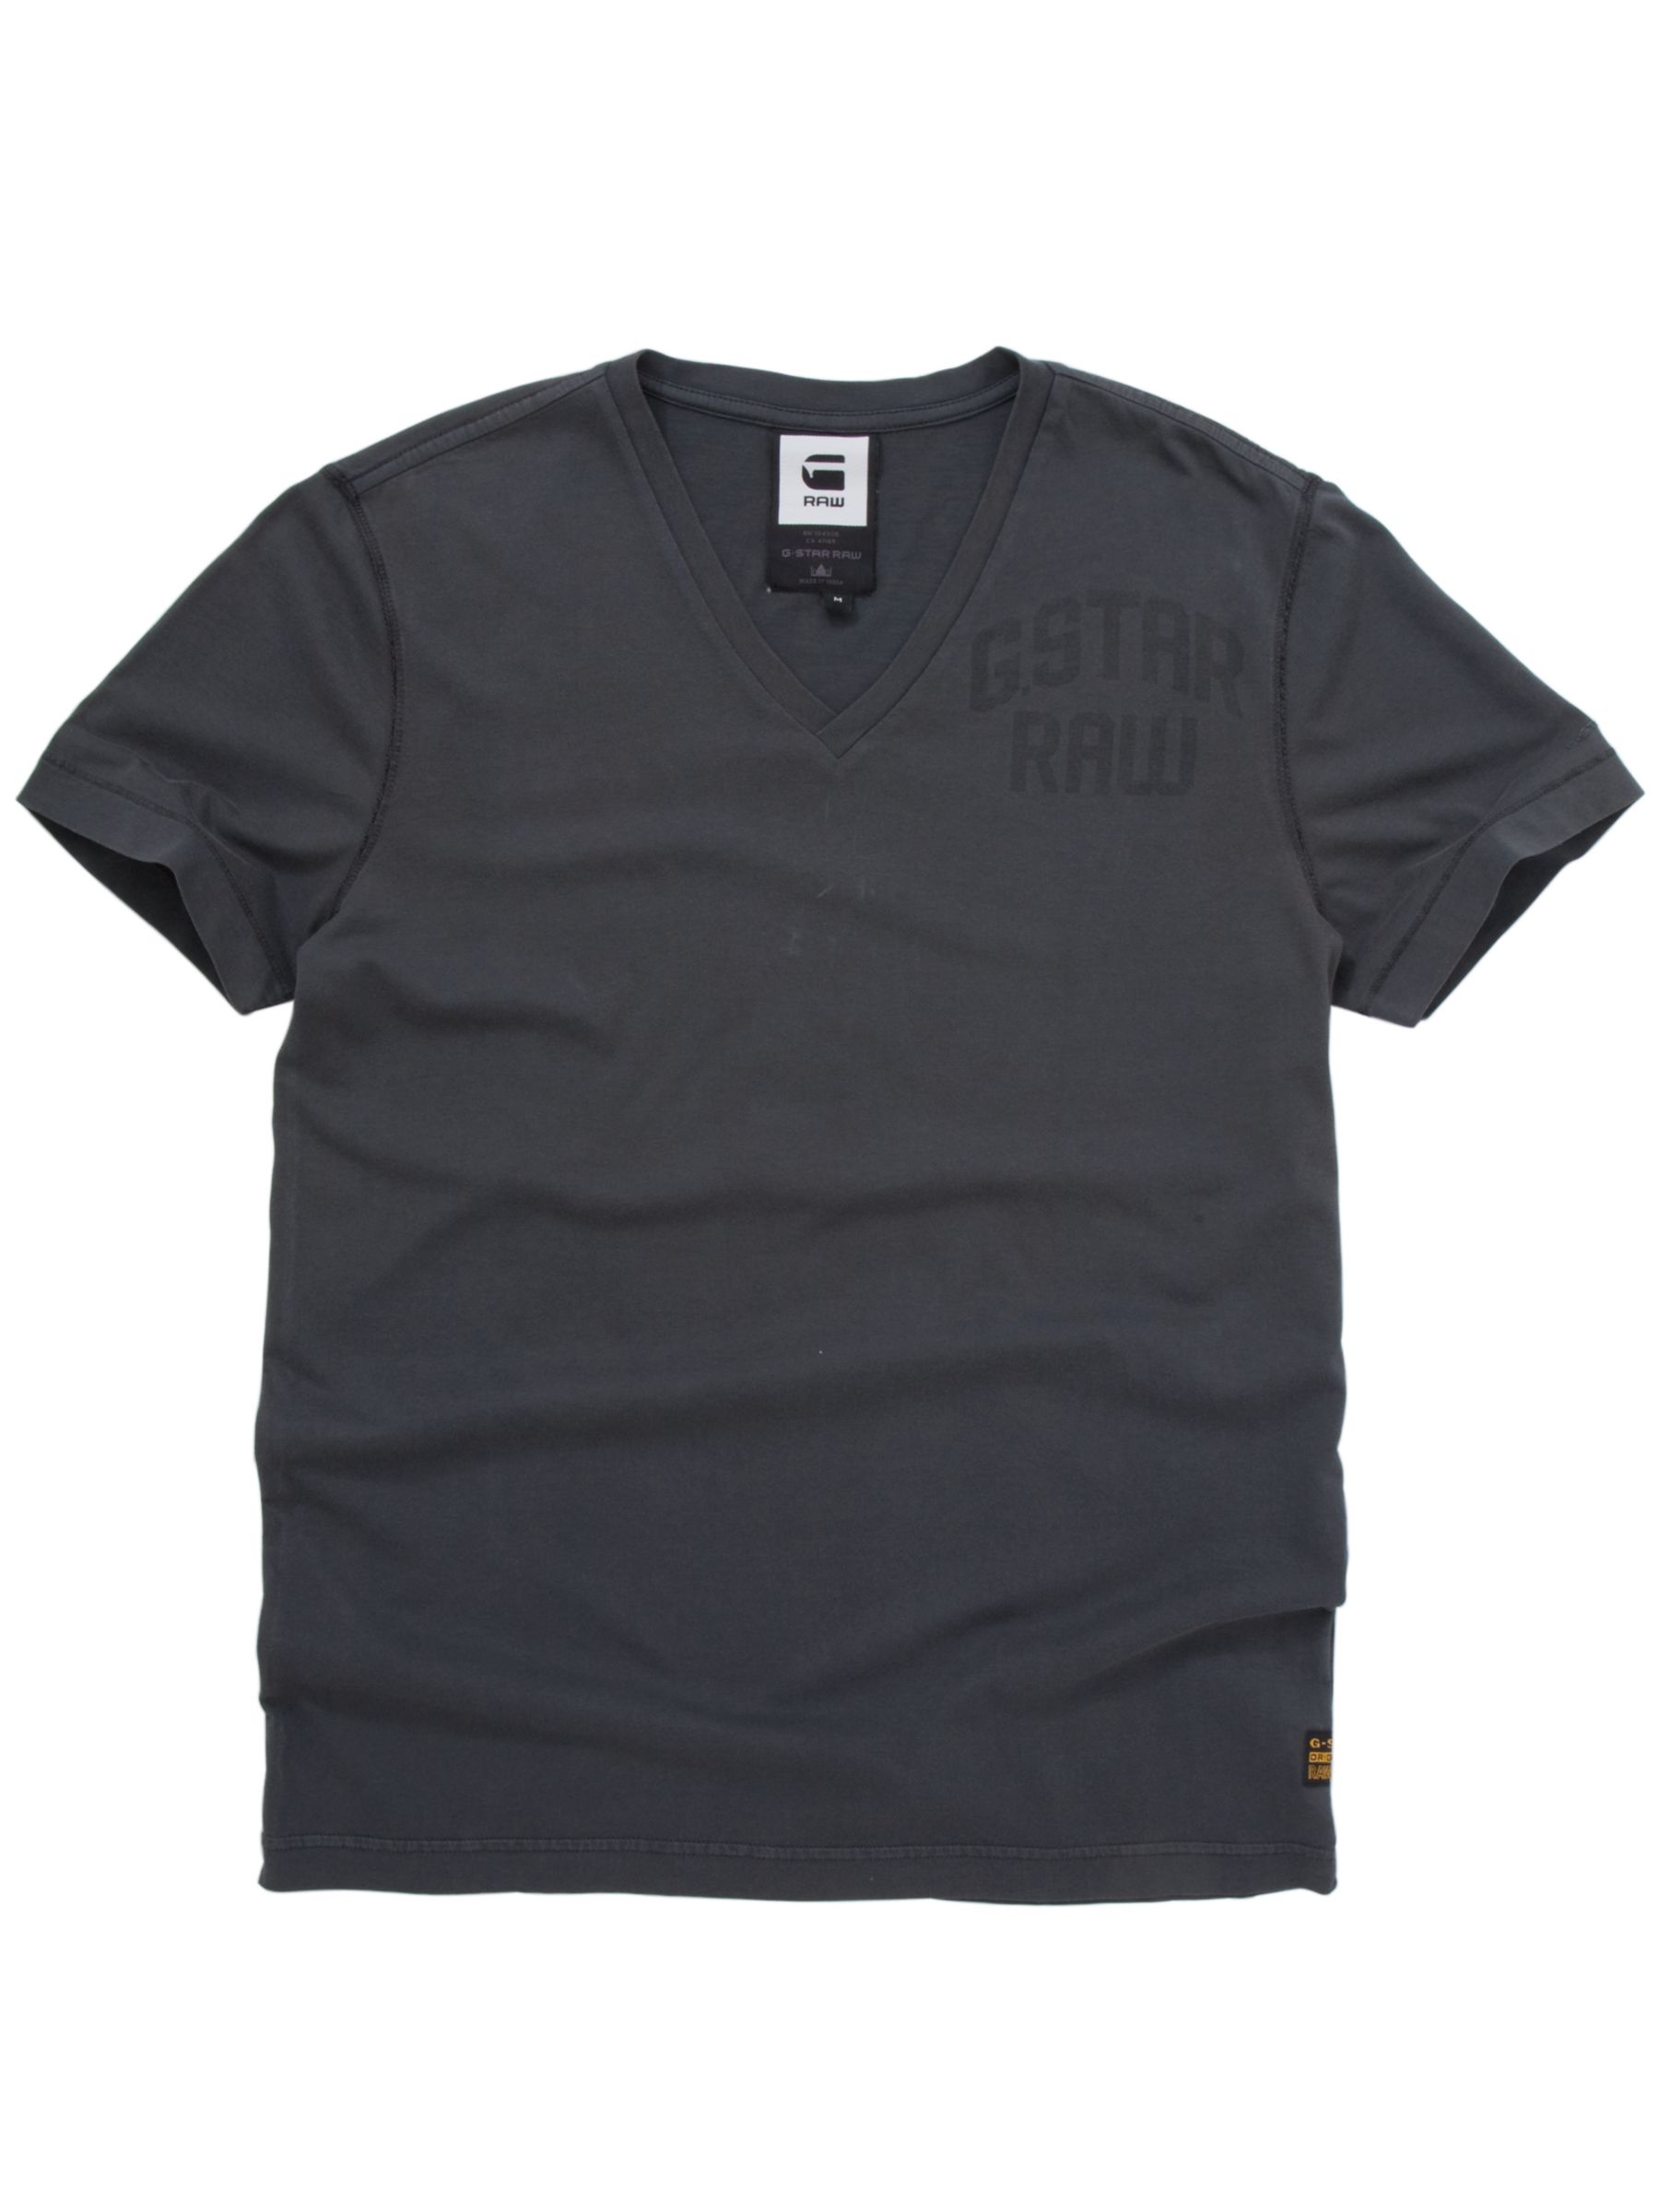 Janeiro V-Neck T-Shirt, Night Grey